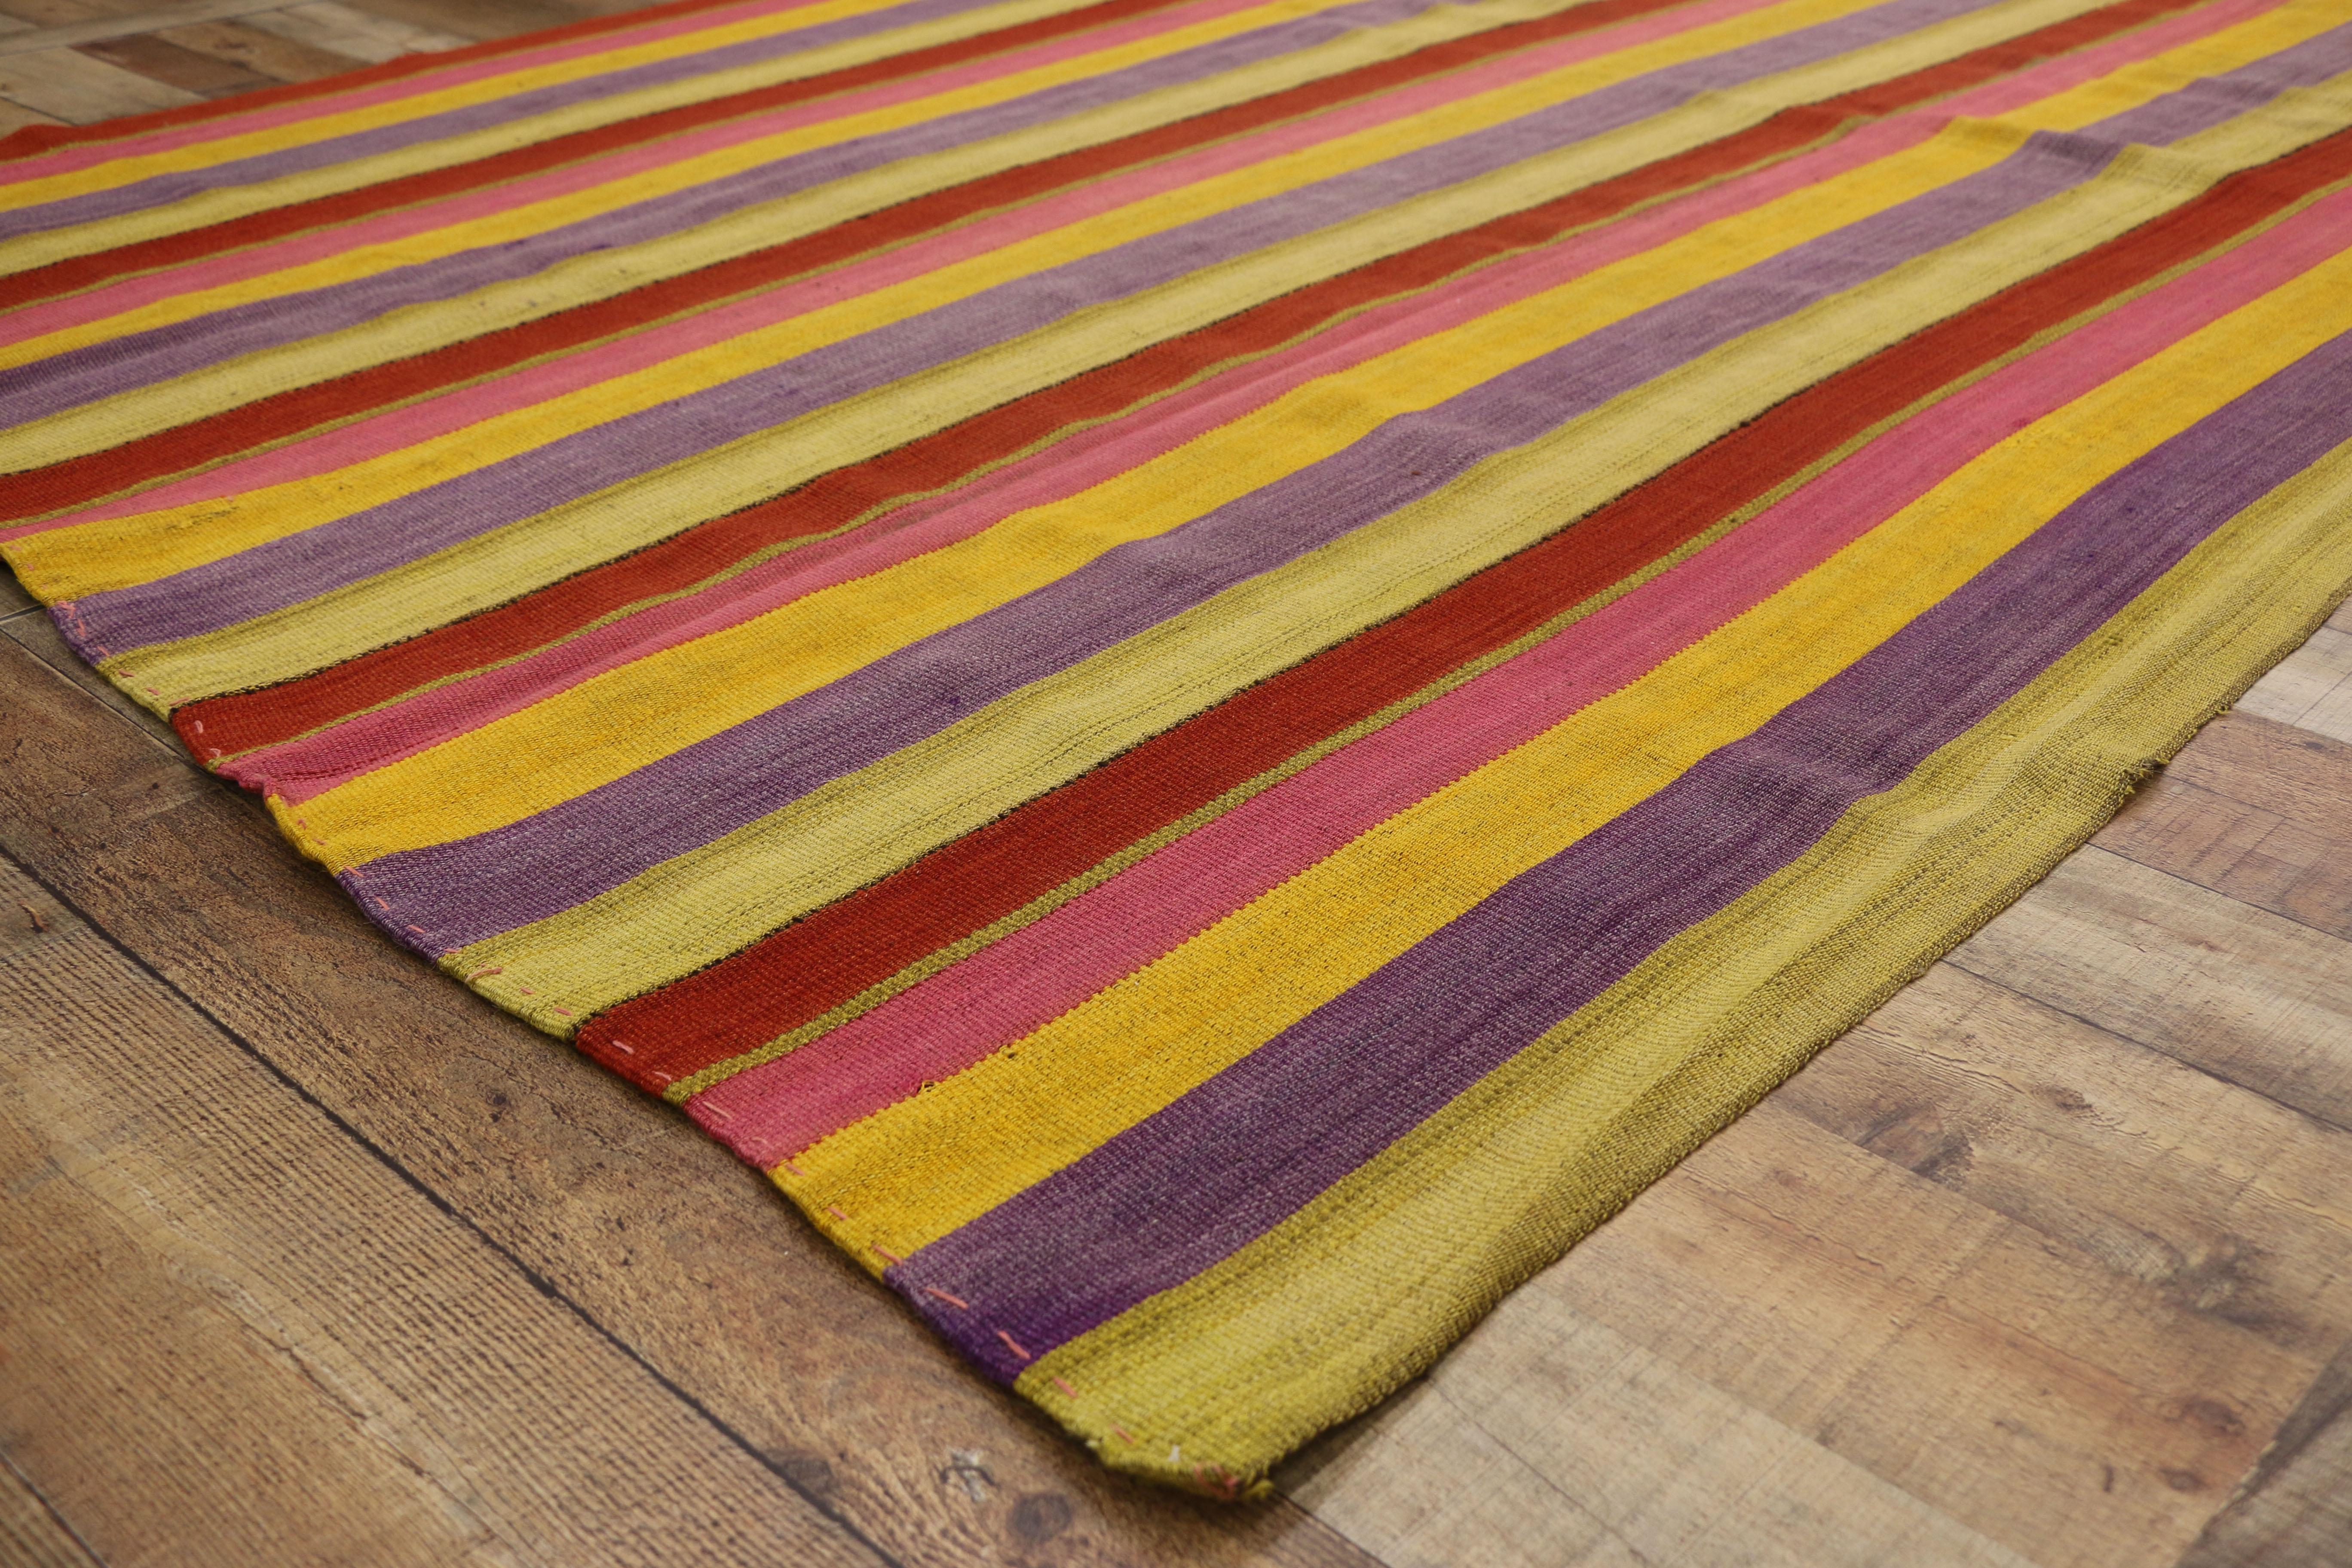 Wool Vintage Turkish Kilim Rug with Stripes in Modern Style, Striped Kilim Rug For Sale